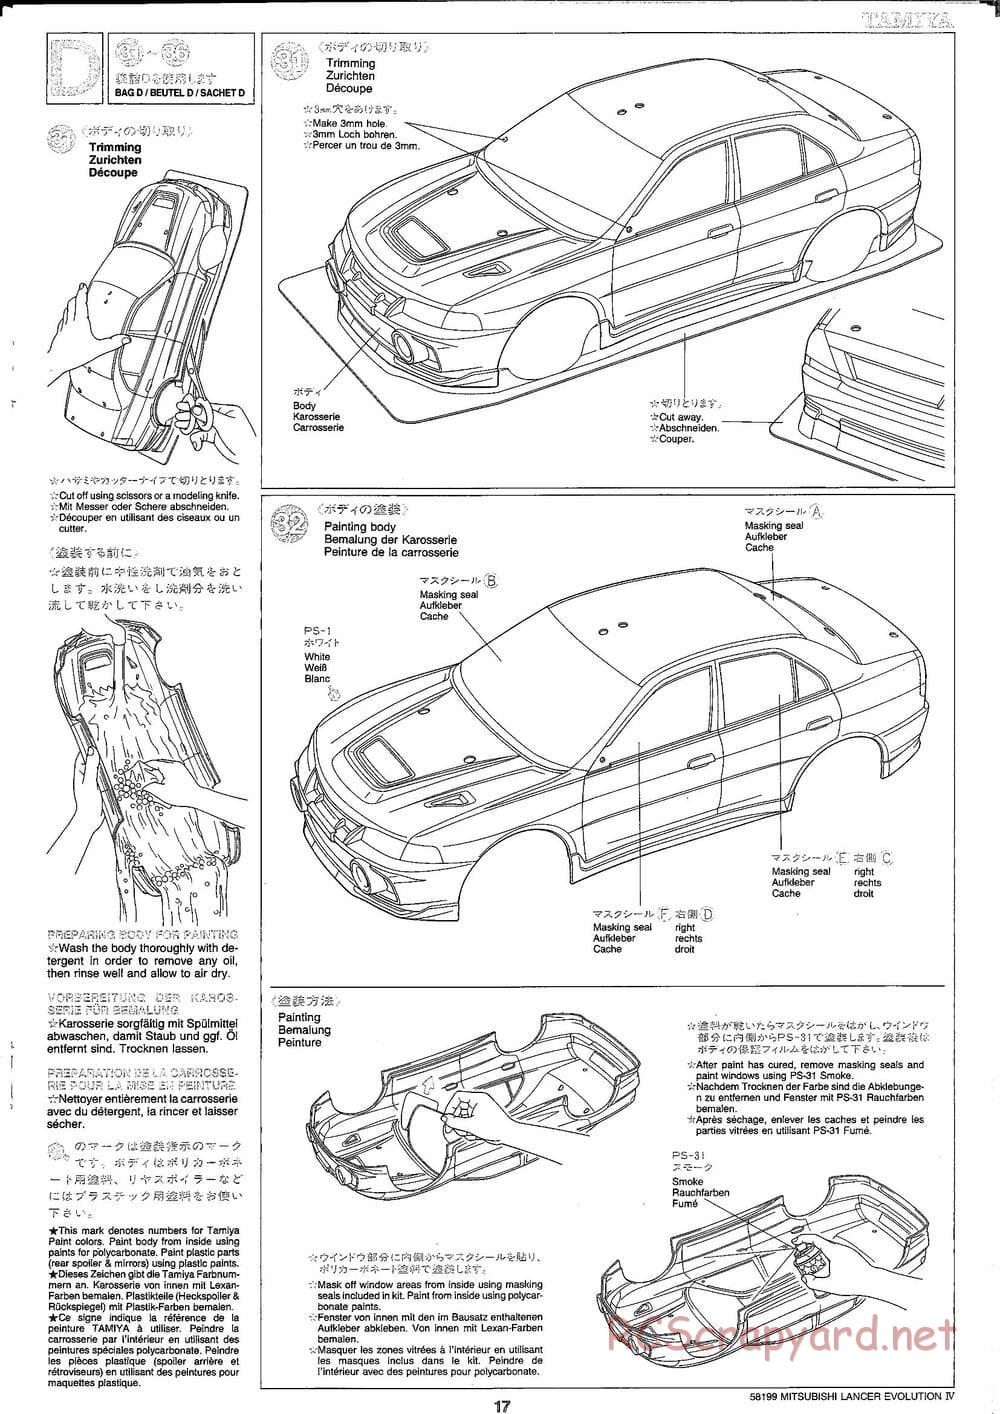 Tamiya - Mitsubishi Lancer Evolution IV - TA-03F Chassis - Manual - Page 17